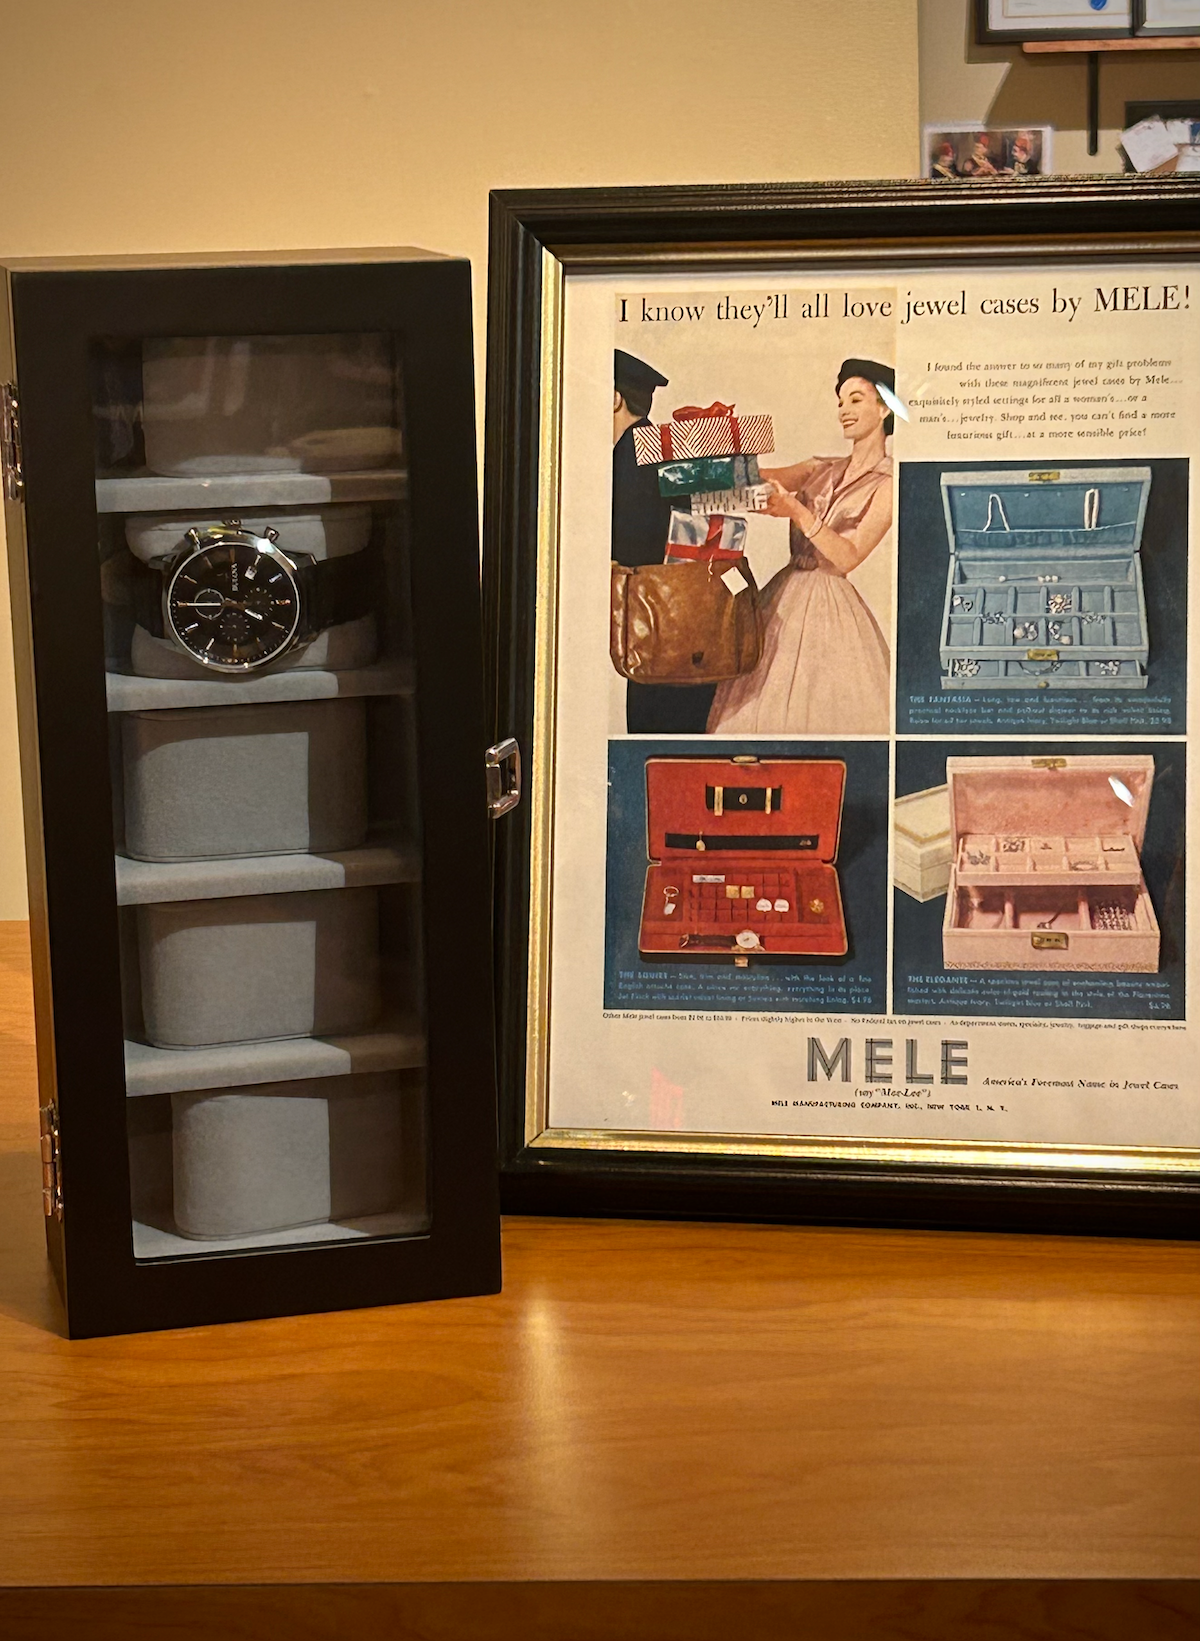 Mele & Co. "Tate" Java Watch Box